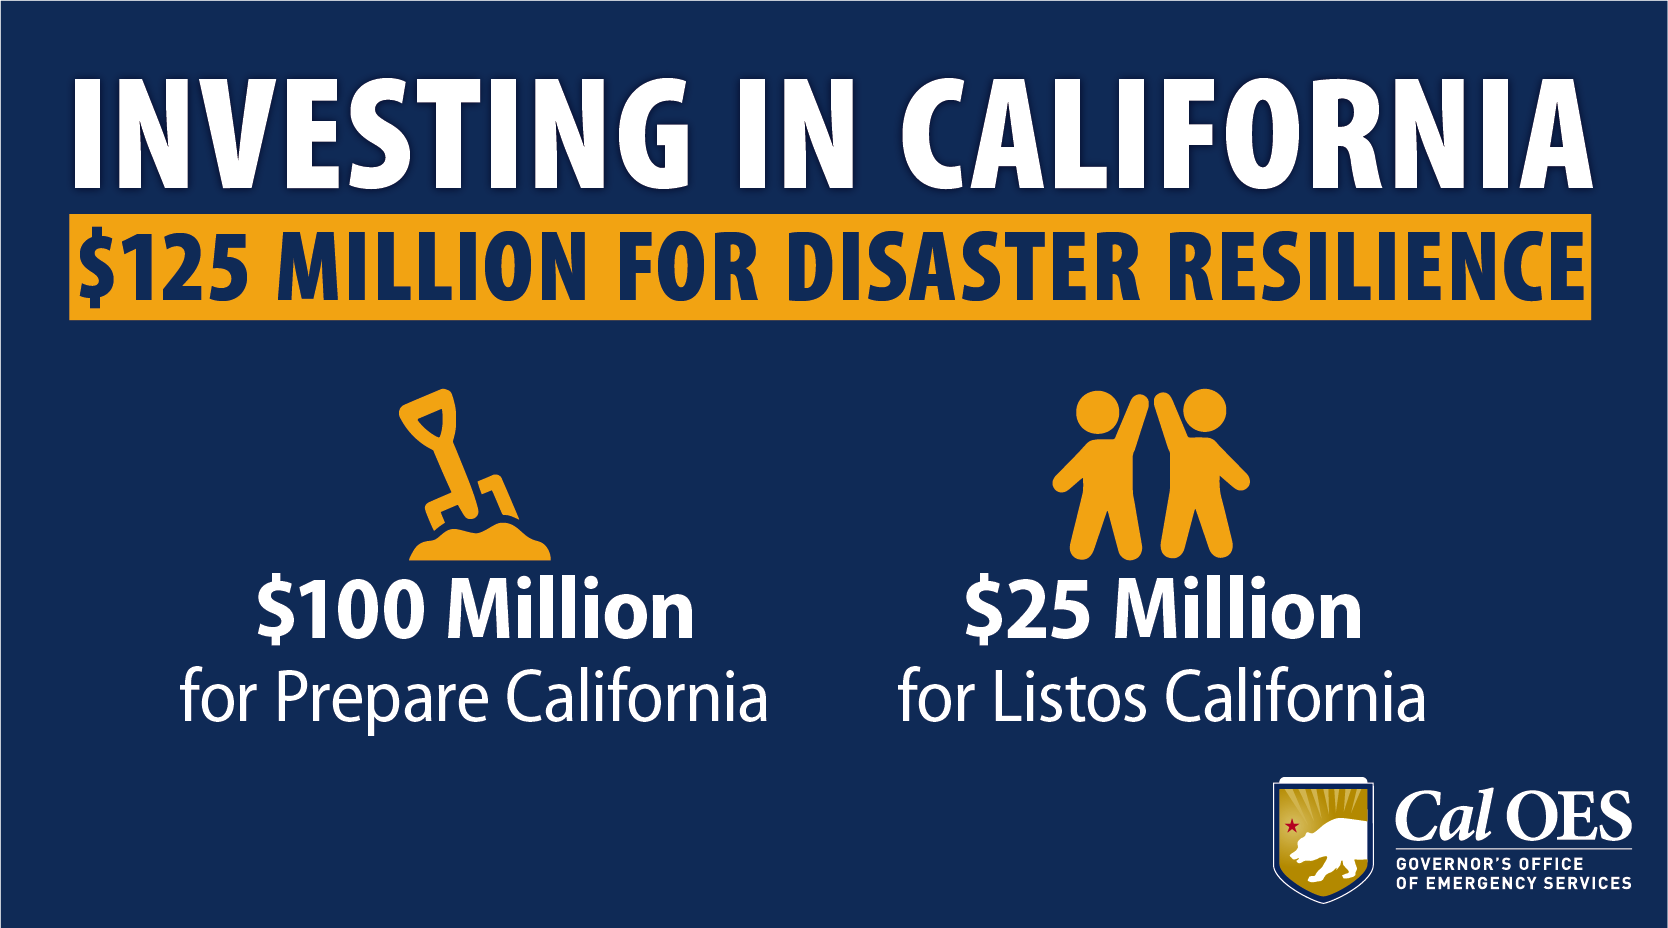 Investing in California: $125 million for disaster resilience. $100 million for Prepare California and $25 million for Listos California